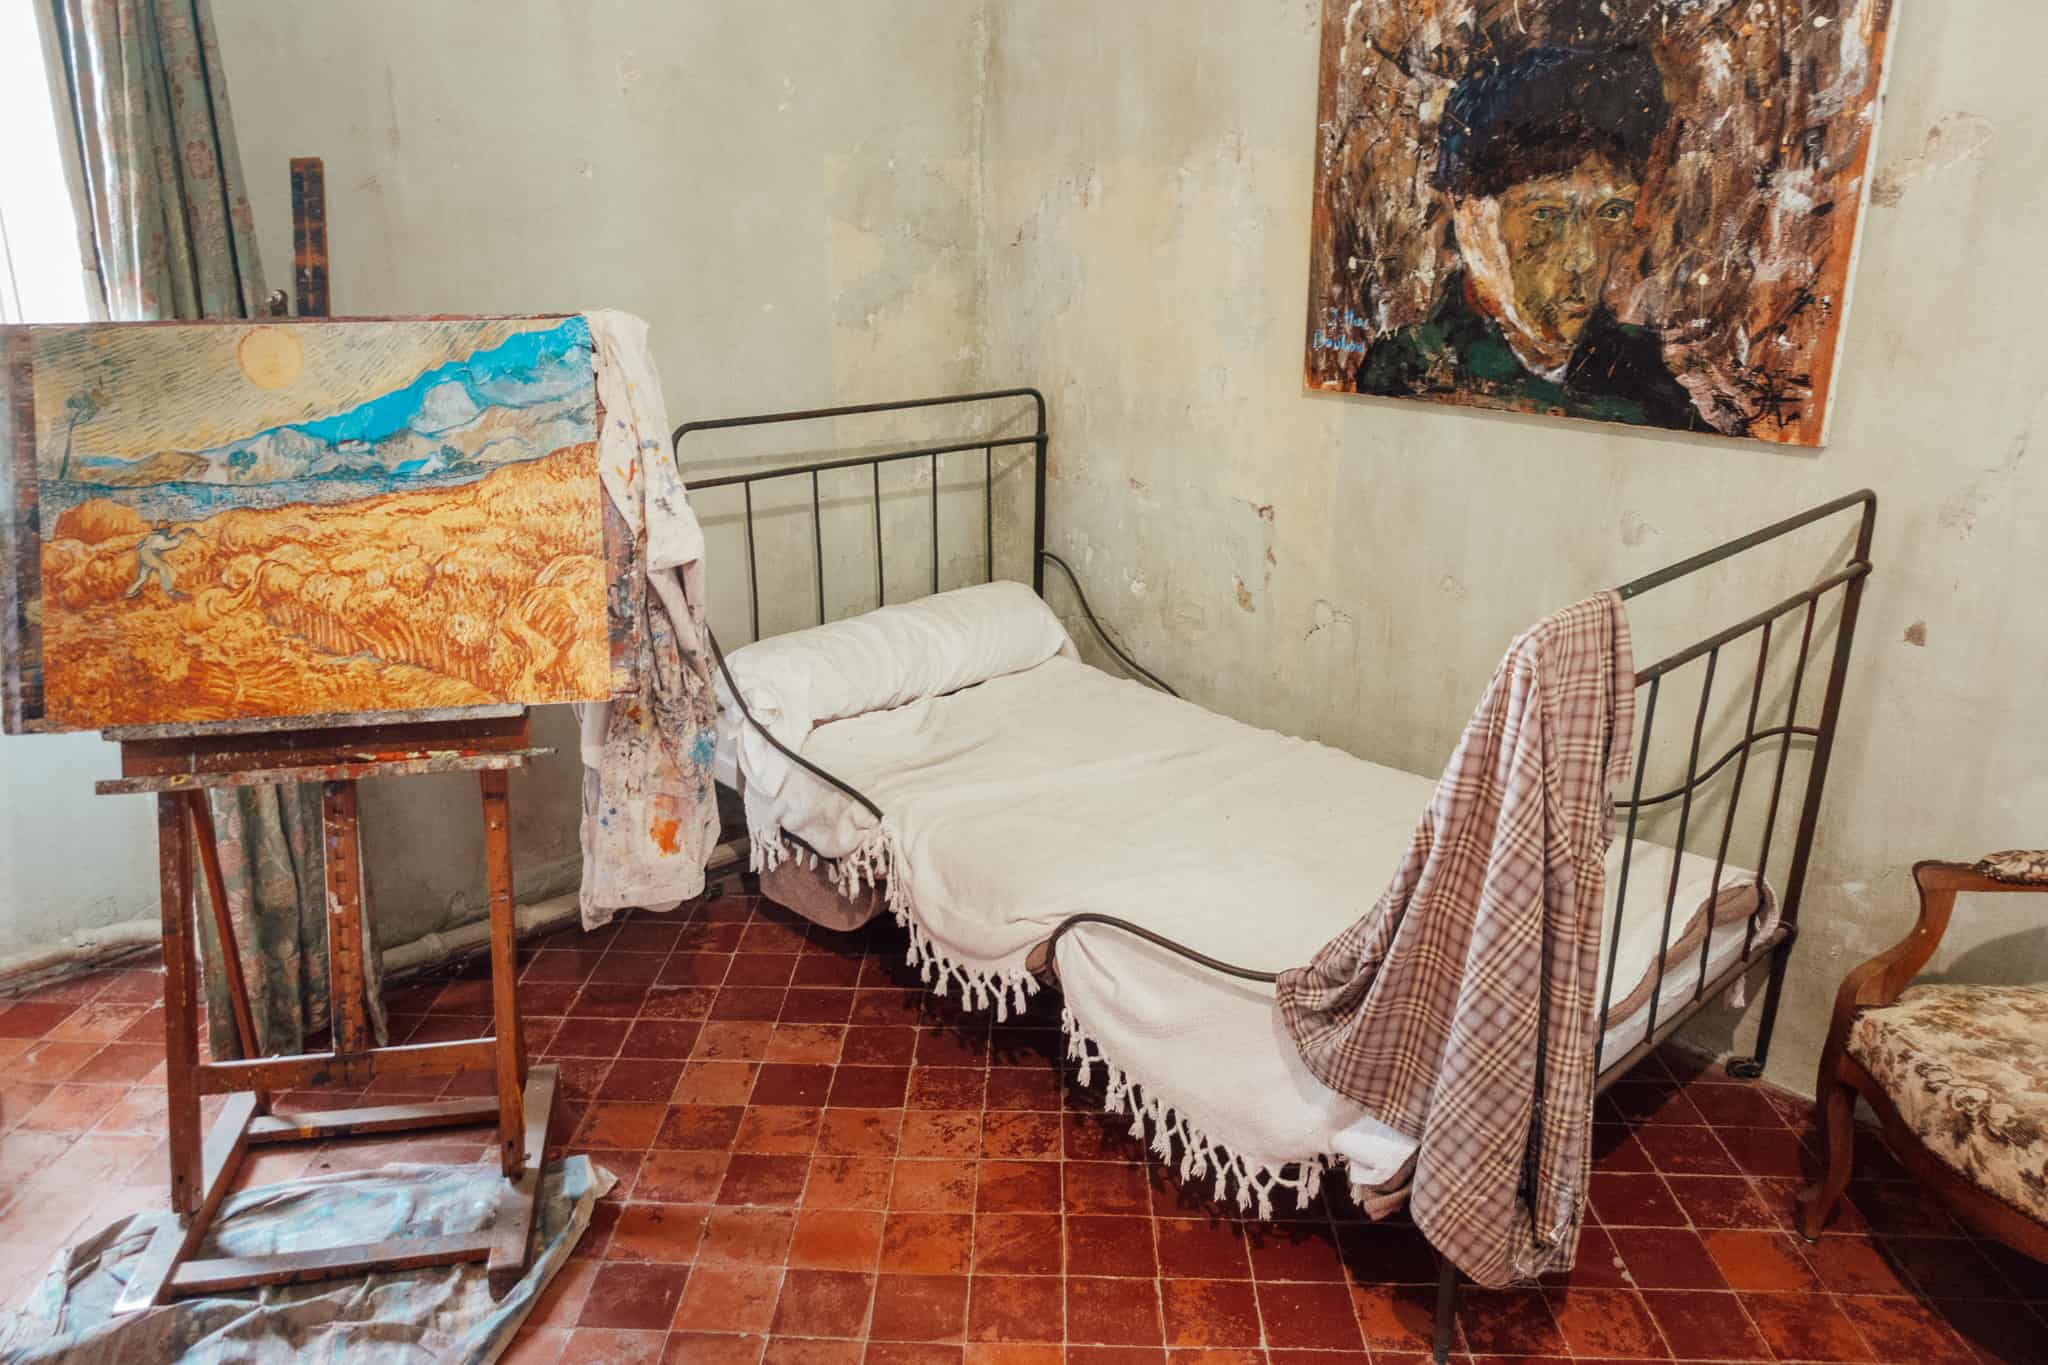 Van Gogh's room at Saint-Paul-de-Mausole Monastery